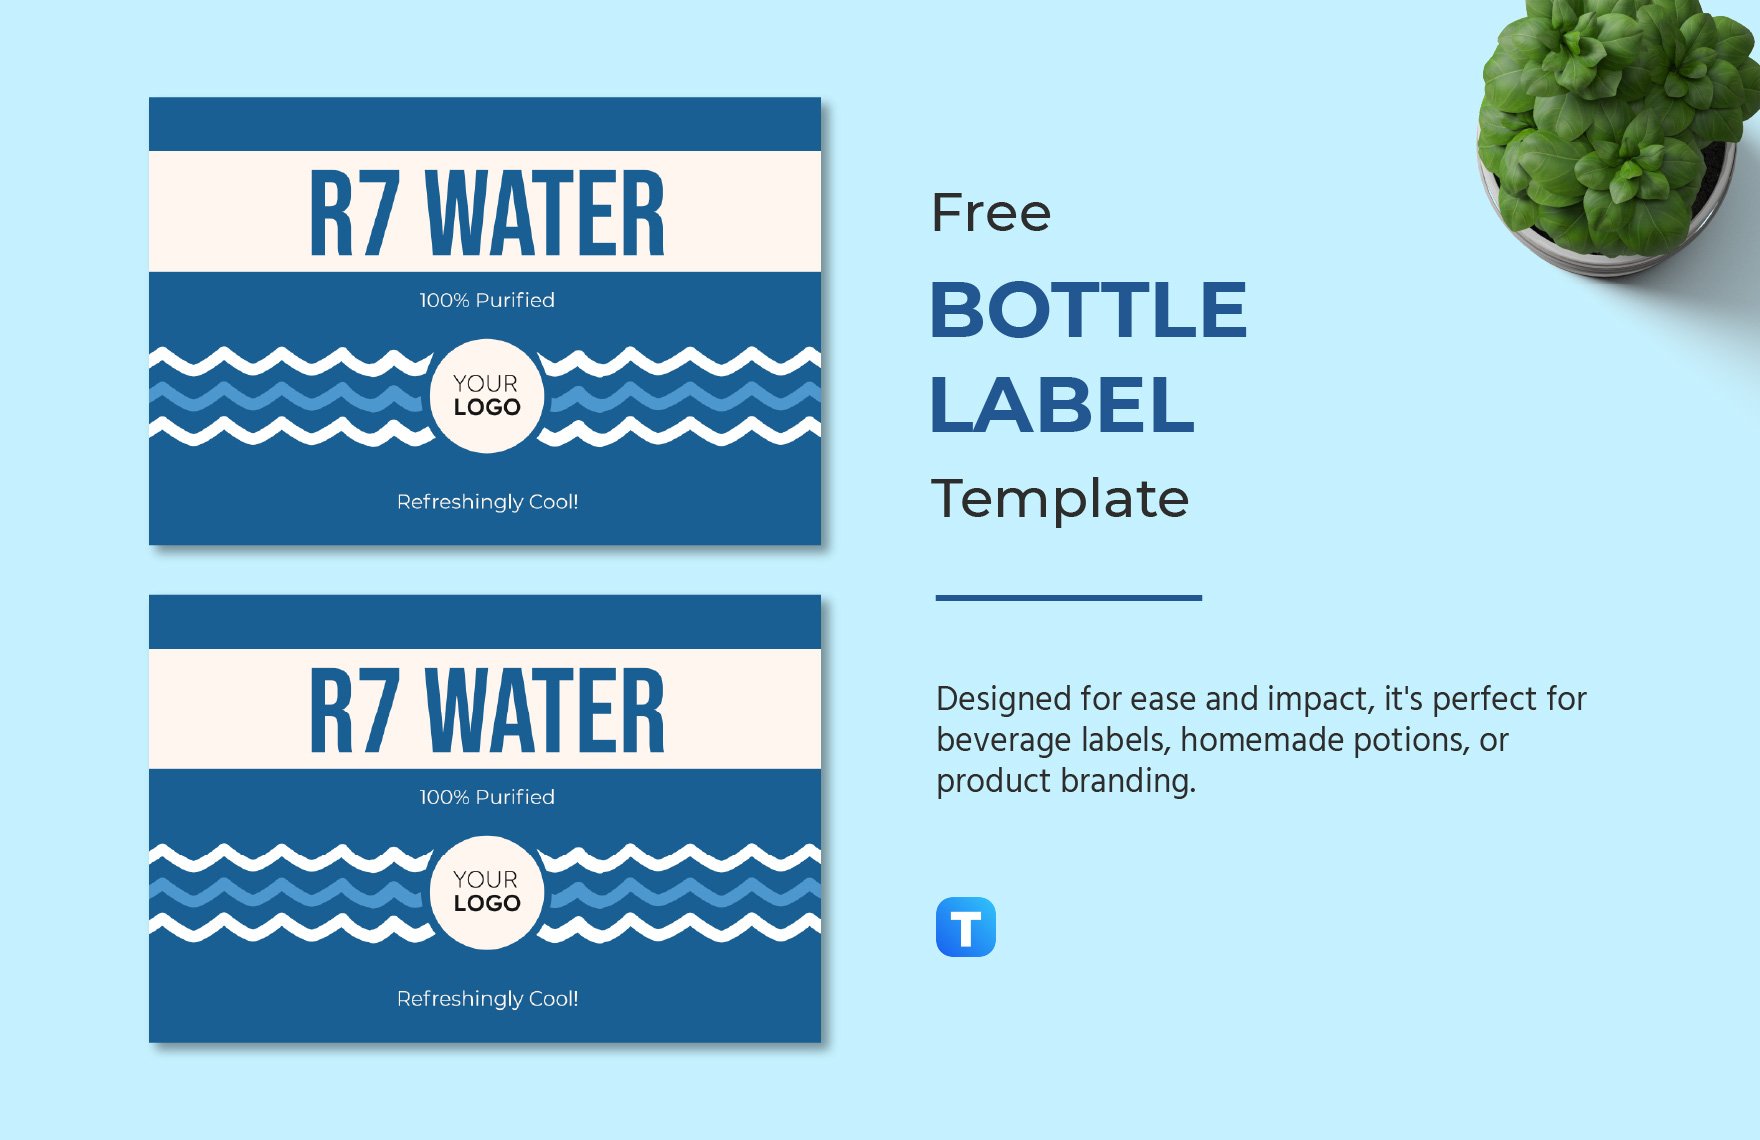 Editable Blippi Water Bottle Label printable Instant download